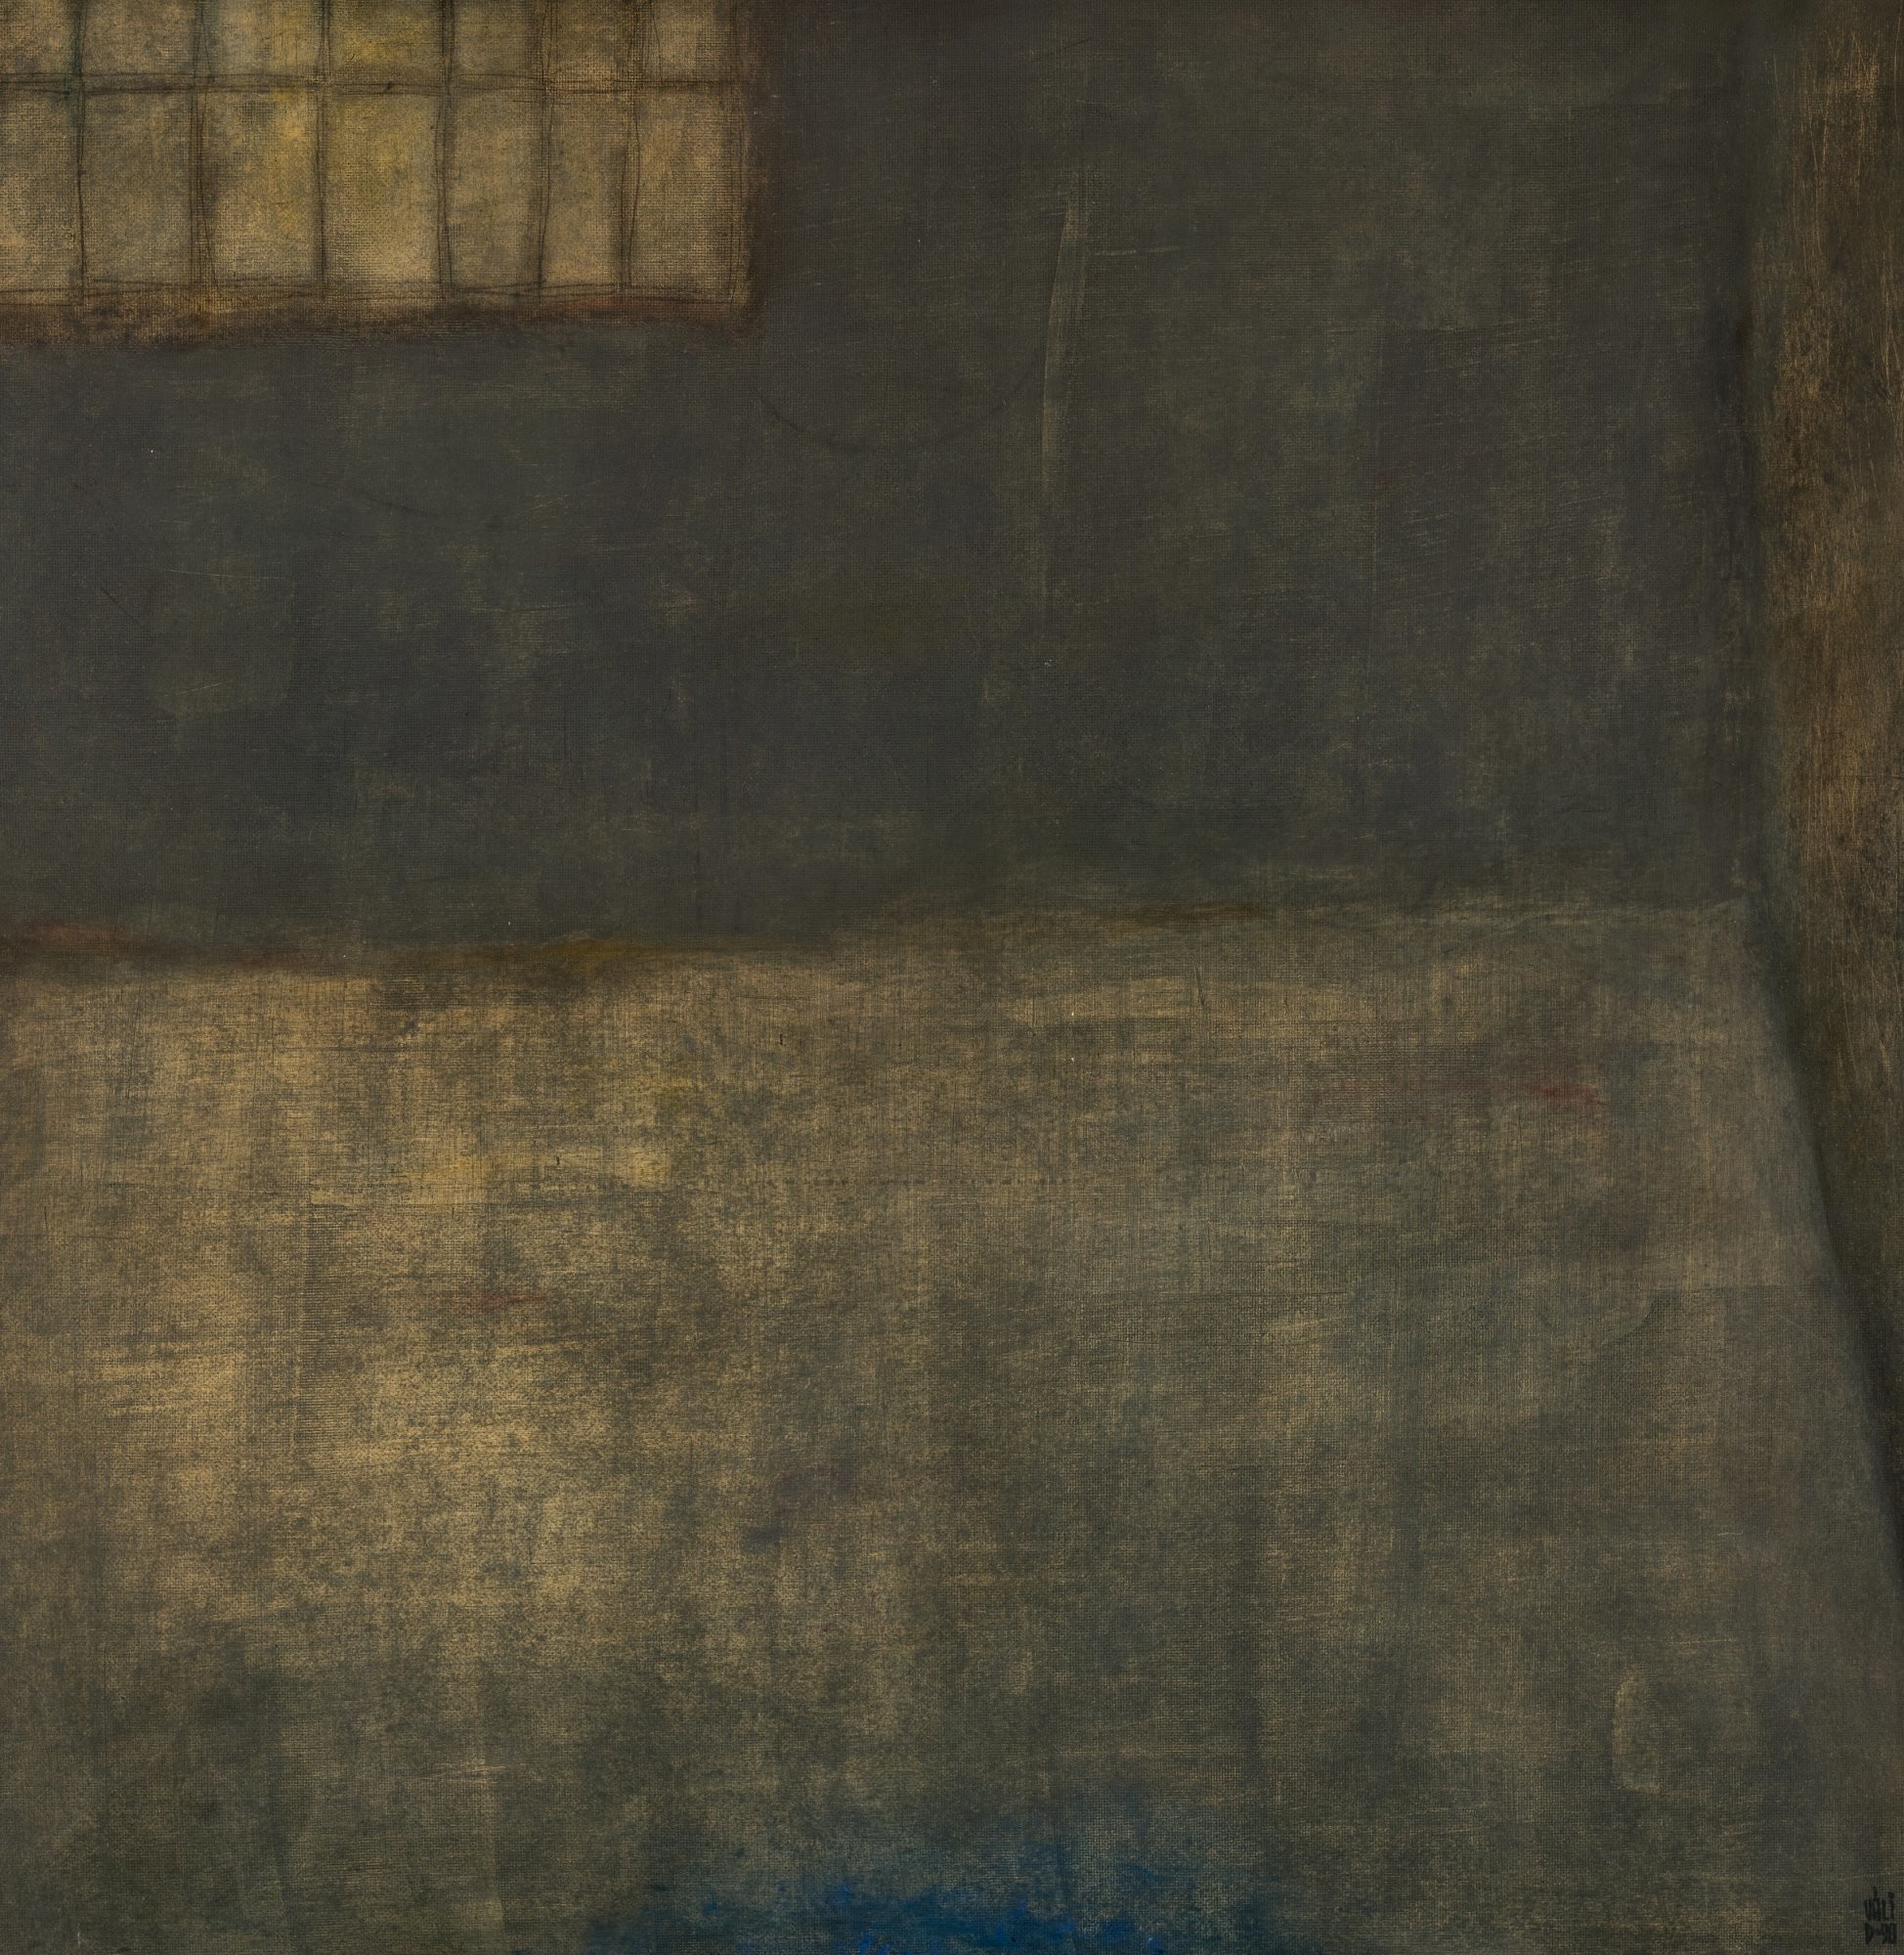 Műterem kék folttal (Rippl-Rónai Múzeum CC BY-NC-ND)